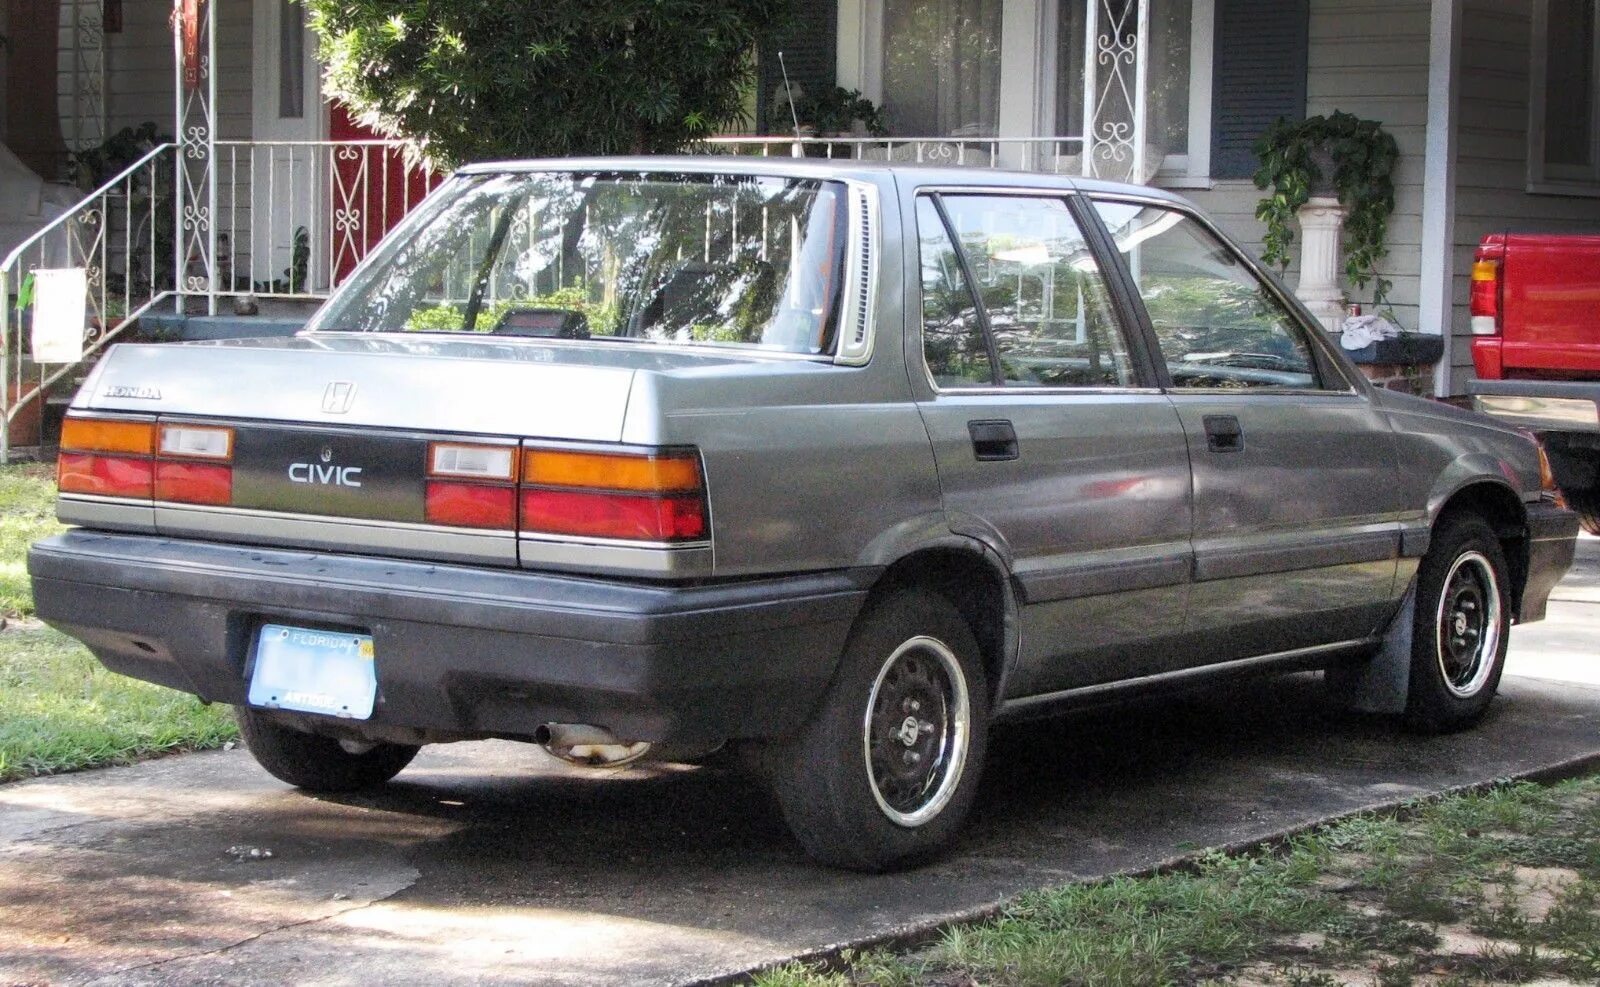 Honda Civic 1986 седан. Хонда Цивик 1986 седан. Хонда Цивик 1986 года седан. Хонда седан 1986. Хонда 1986